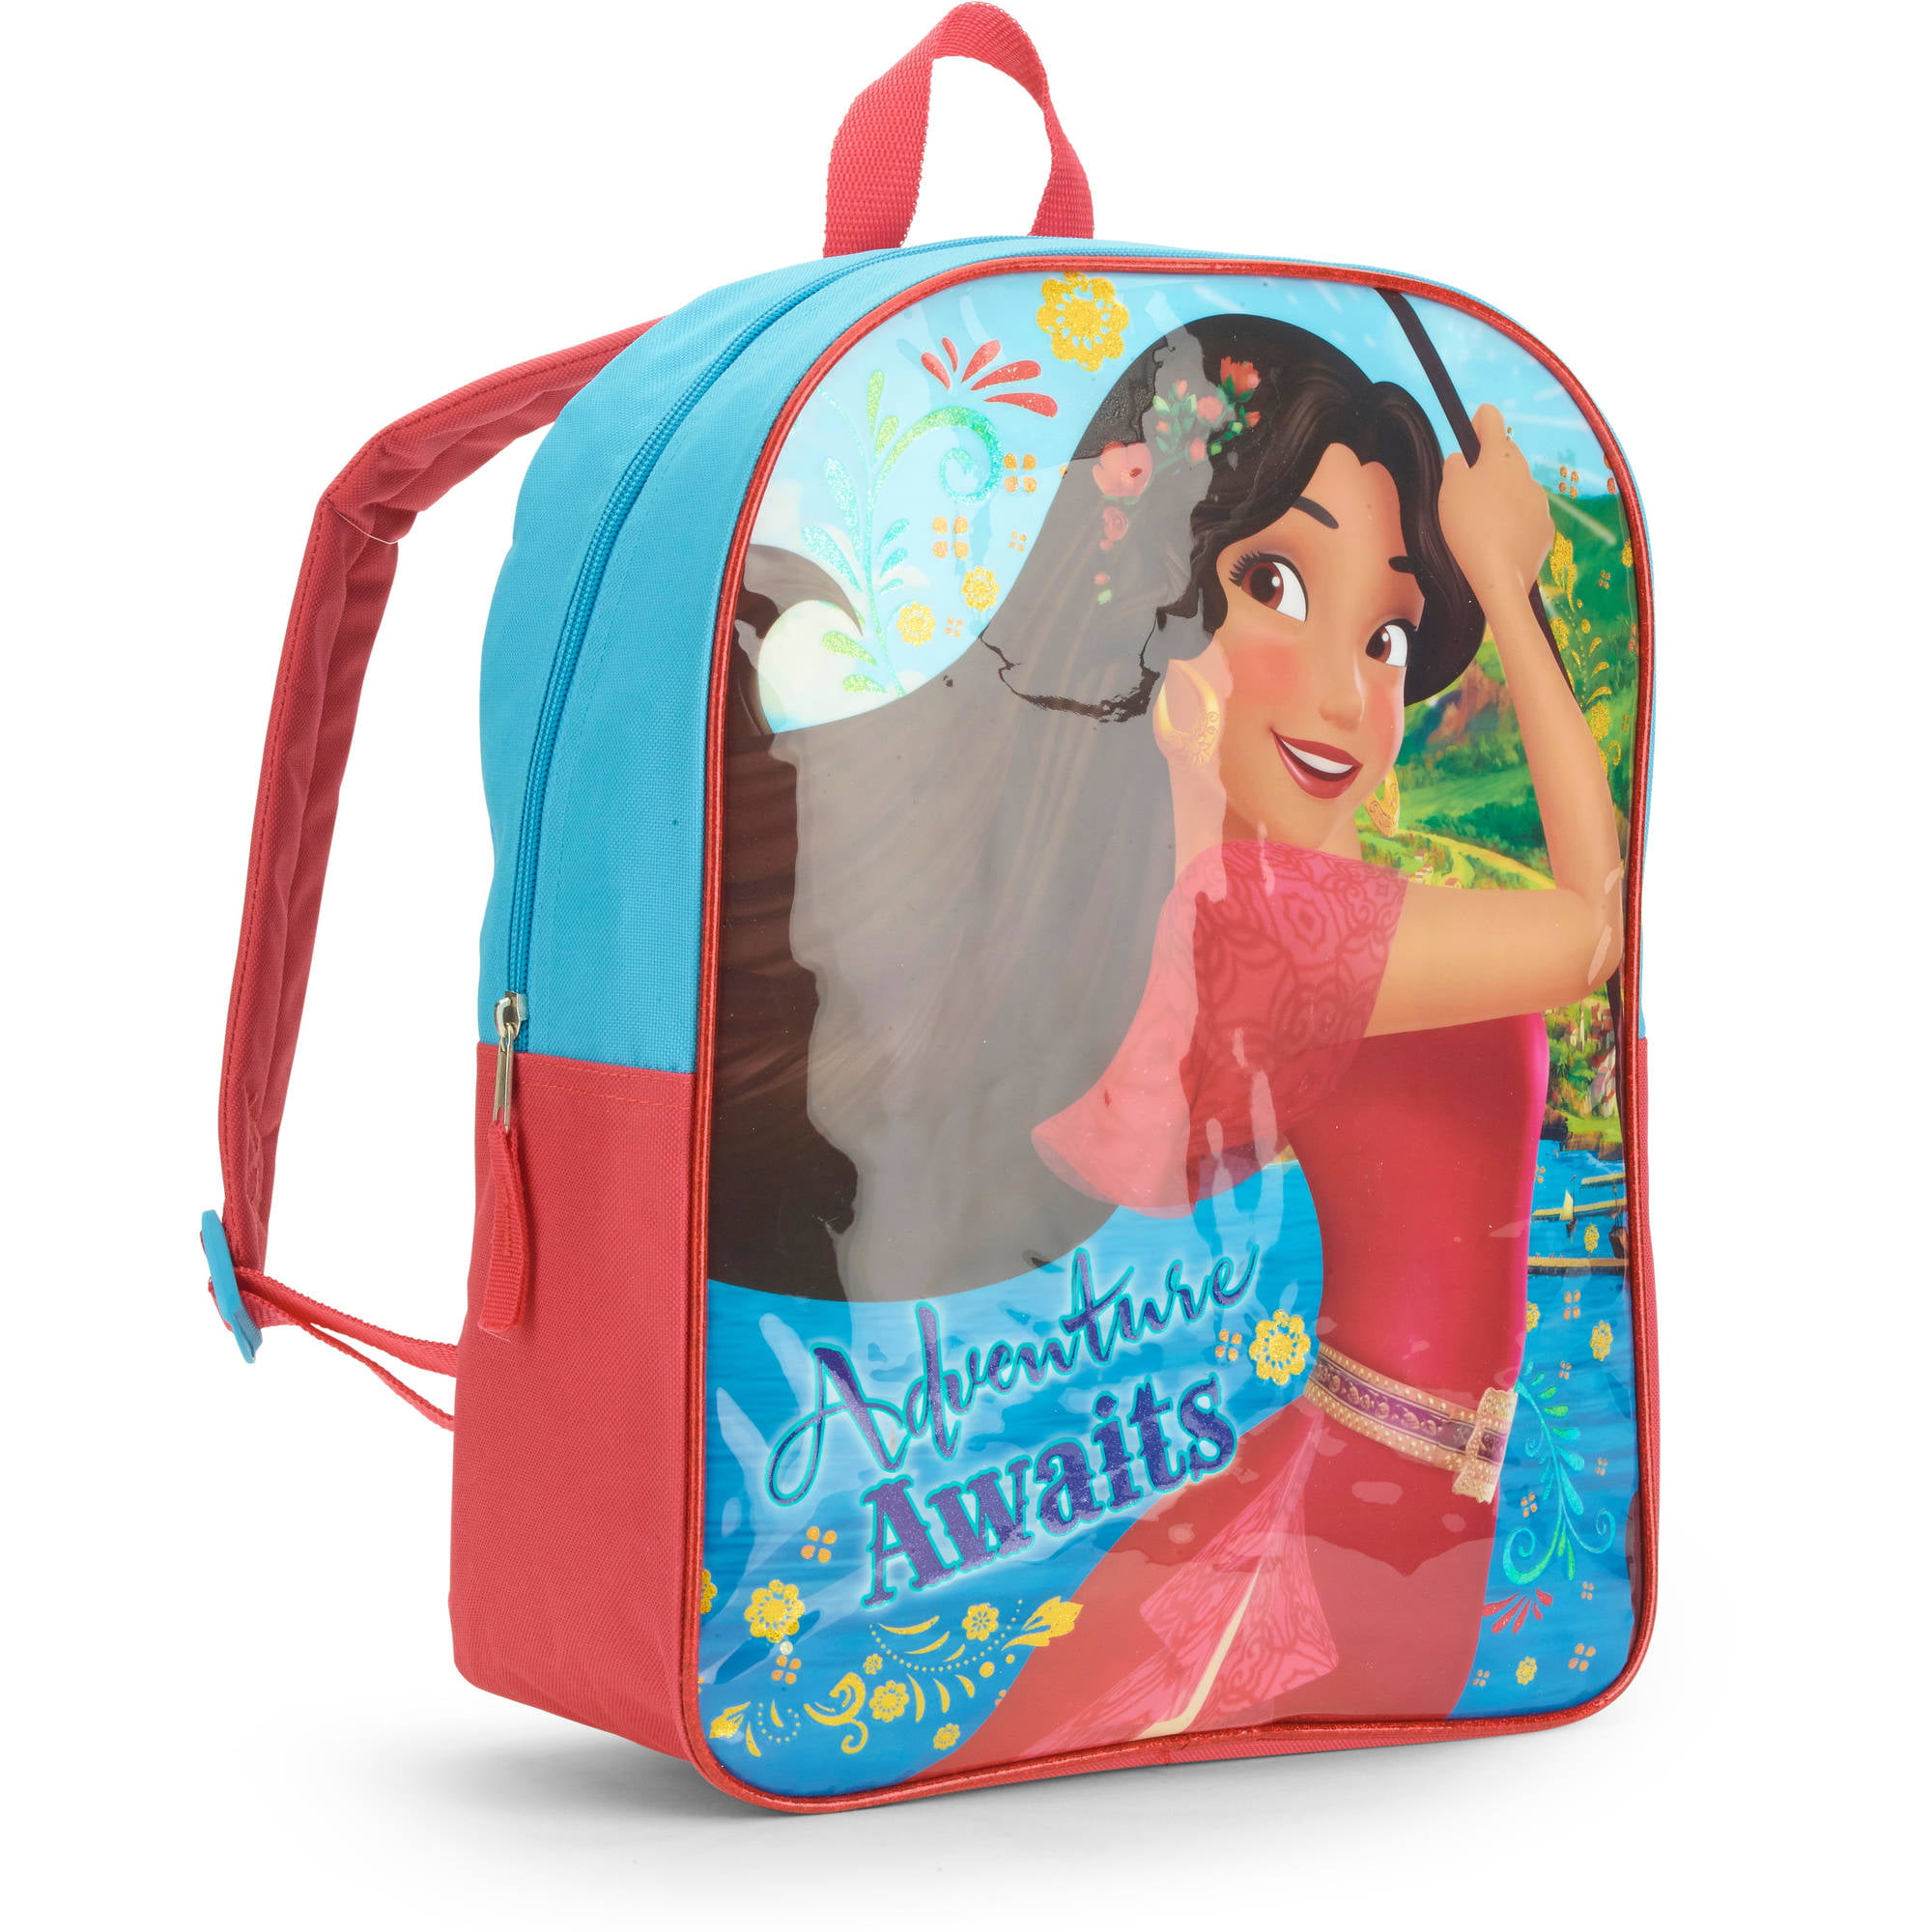 15"H New Disney Elena Avalor Backpack 